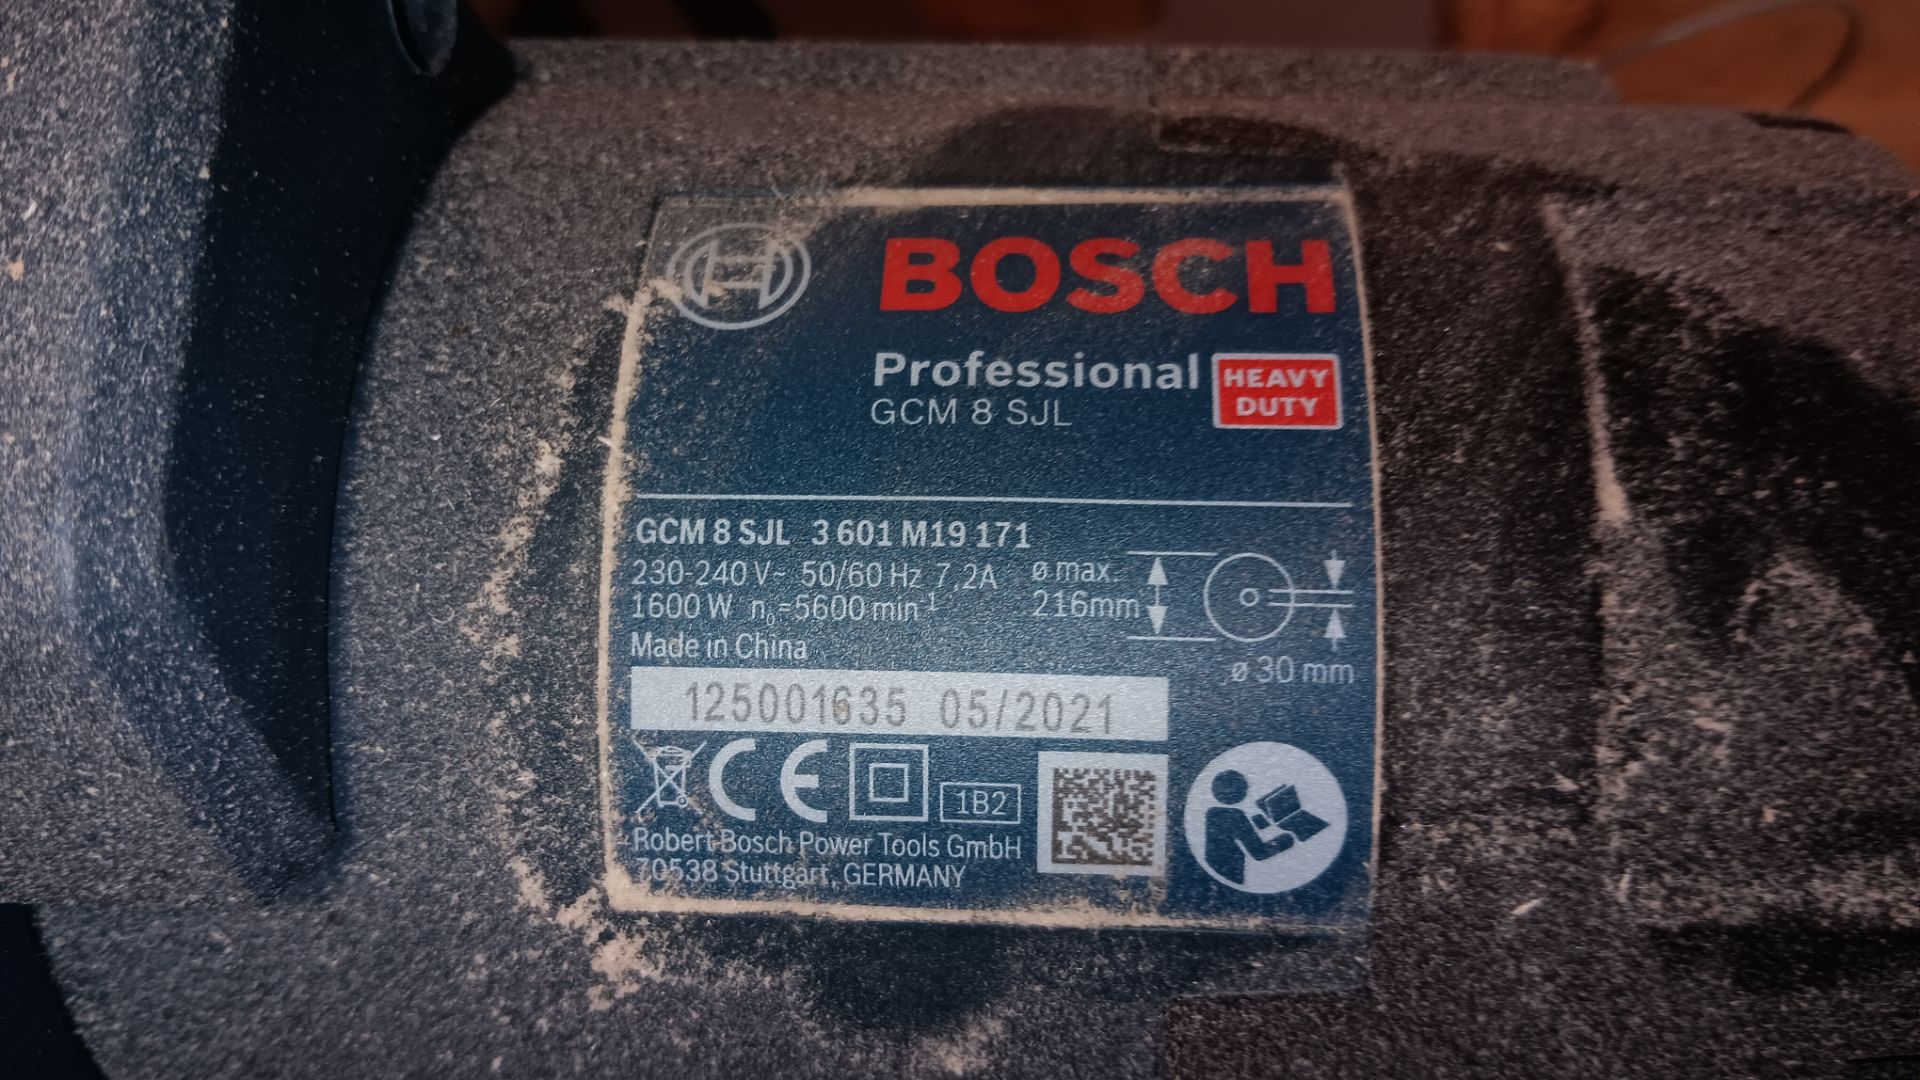 Bosch GCM 8 SJL Sliding Mitre Saw (May 2021) S/N 125001635, 240v - Image 3 of 3